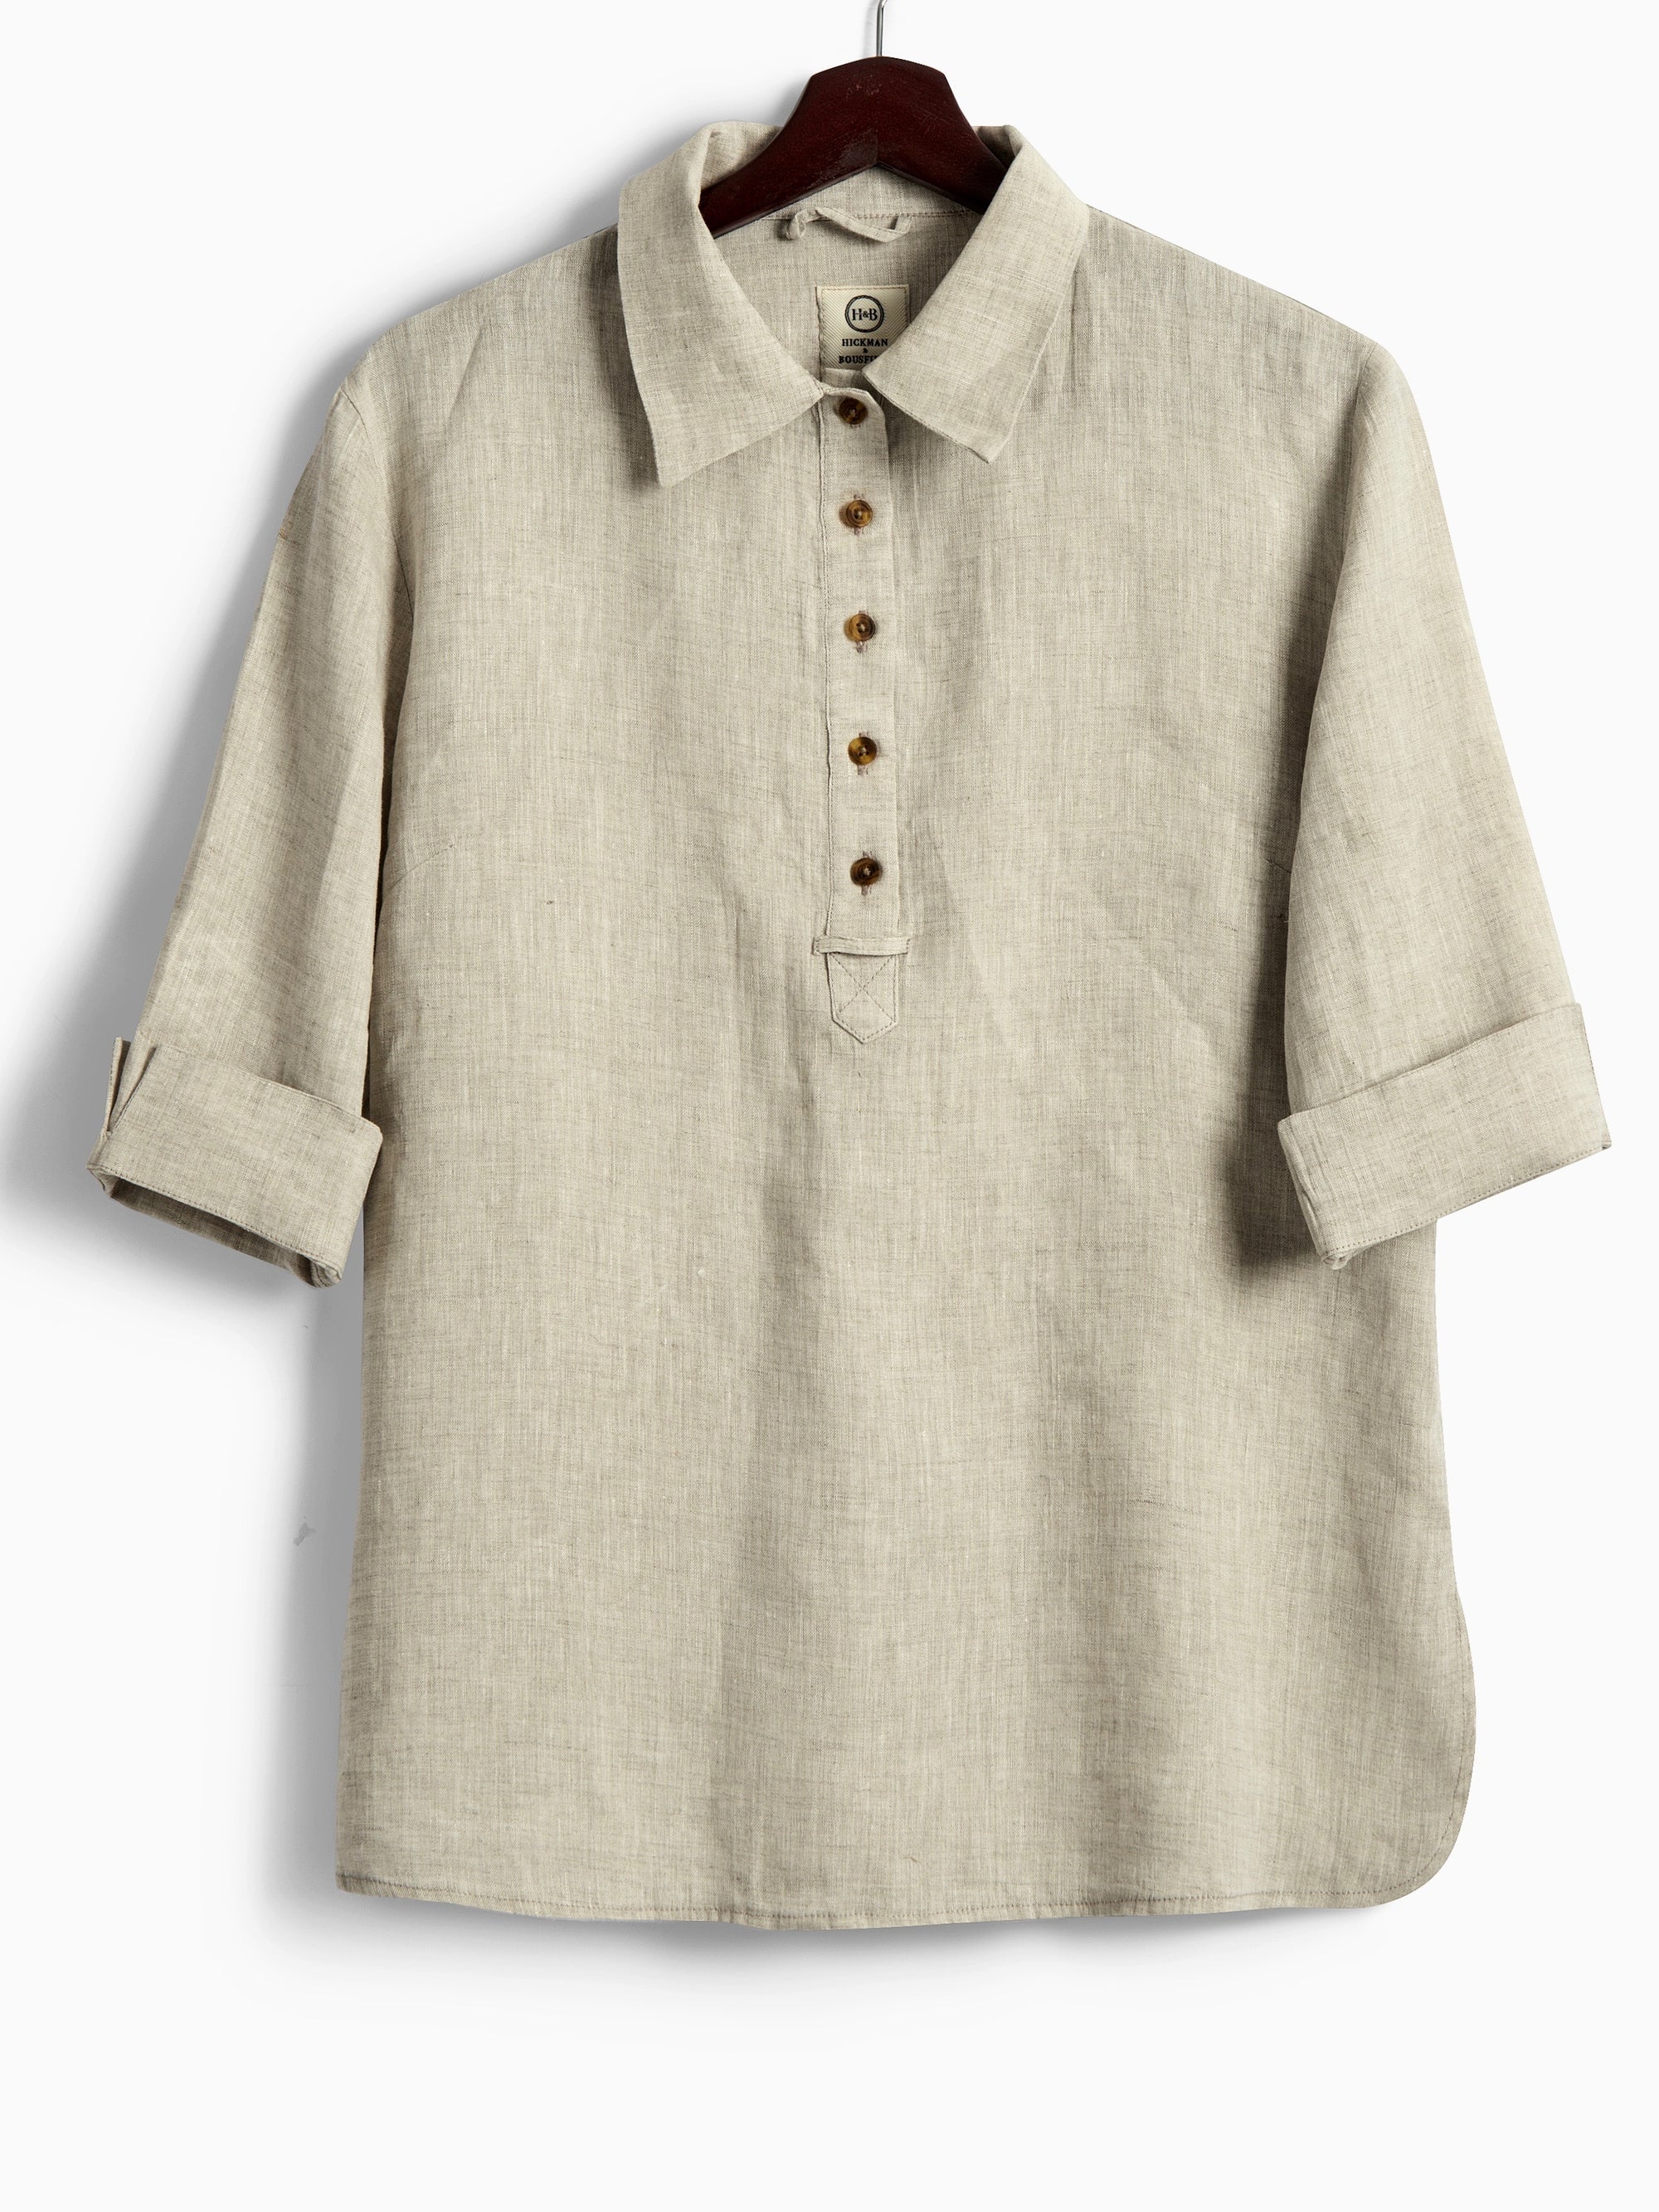 Safari Shirt in Natural Linen, Shirt, Hickman & Bousfield - Hickman & Bousfield, Safari and Travel Clothing